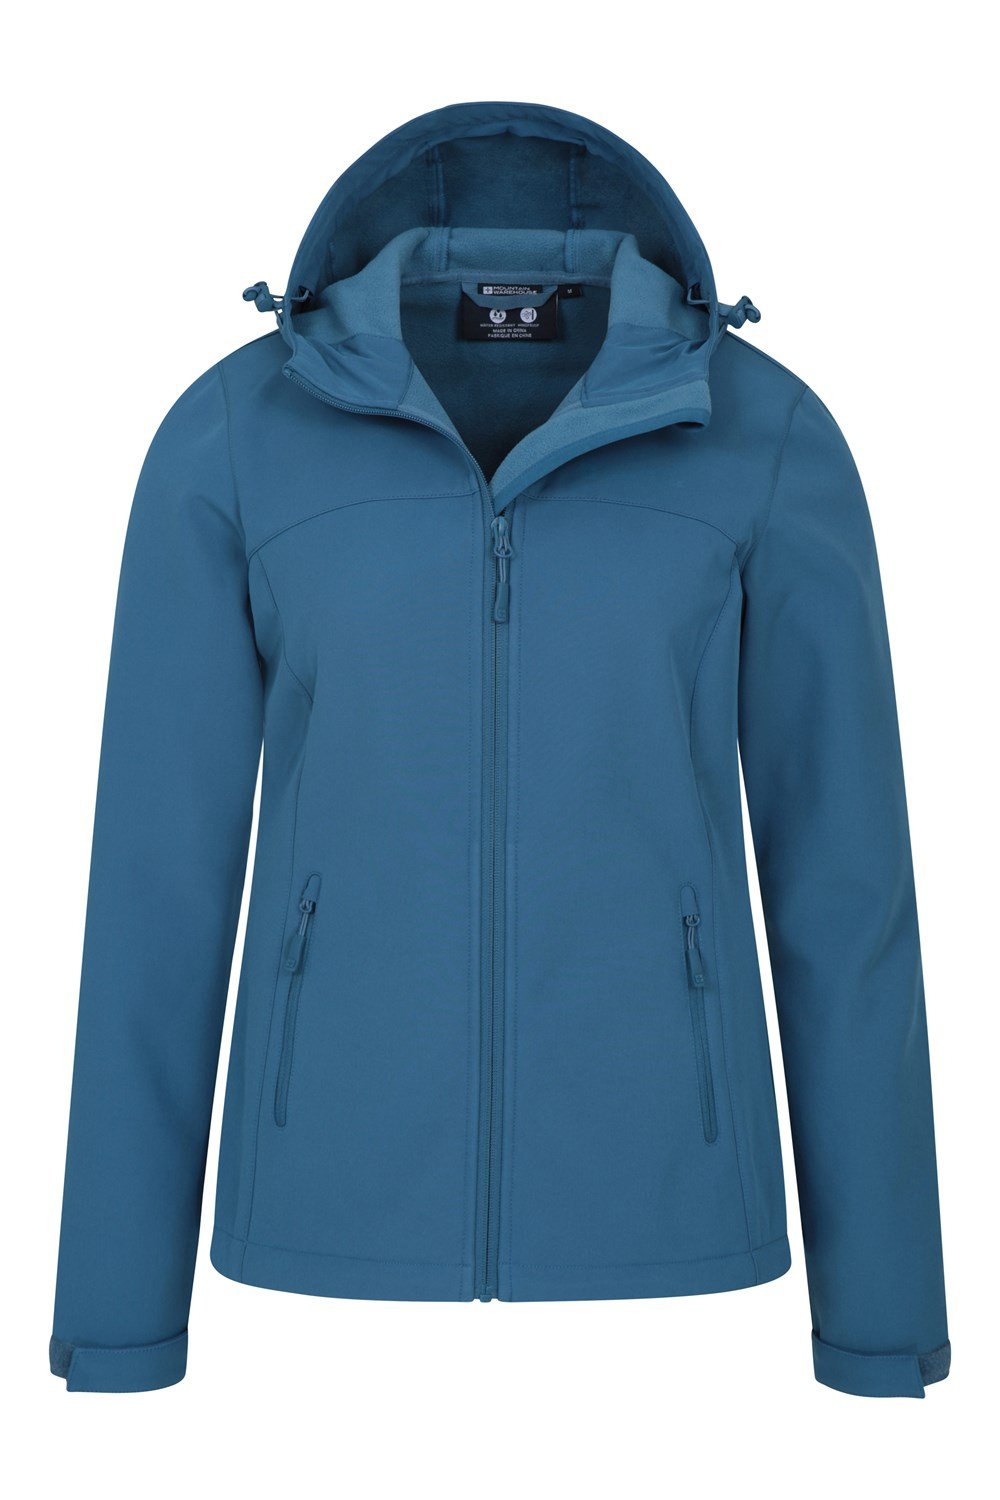 Mountain Warehouse Exodus Ladies Softshell Jacket Water Resistant ...